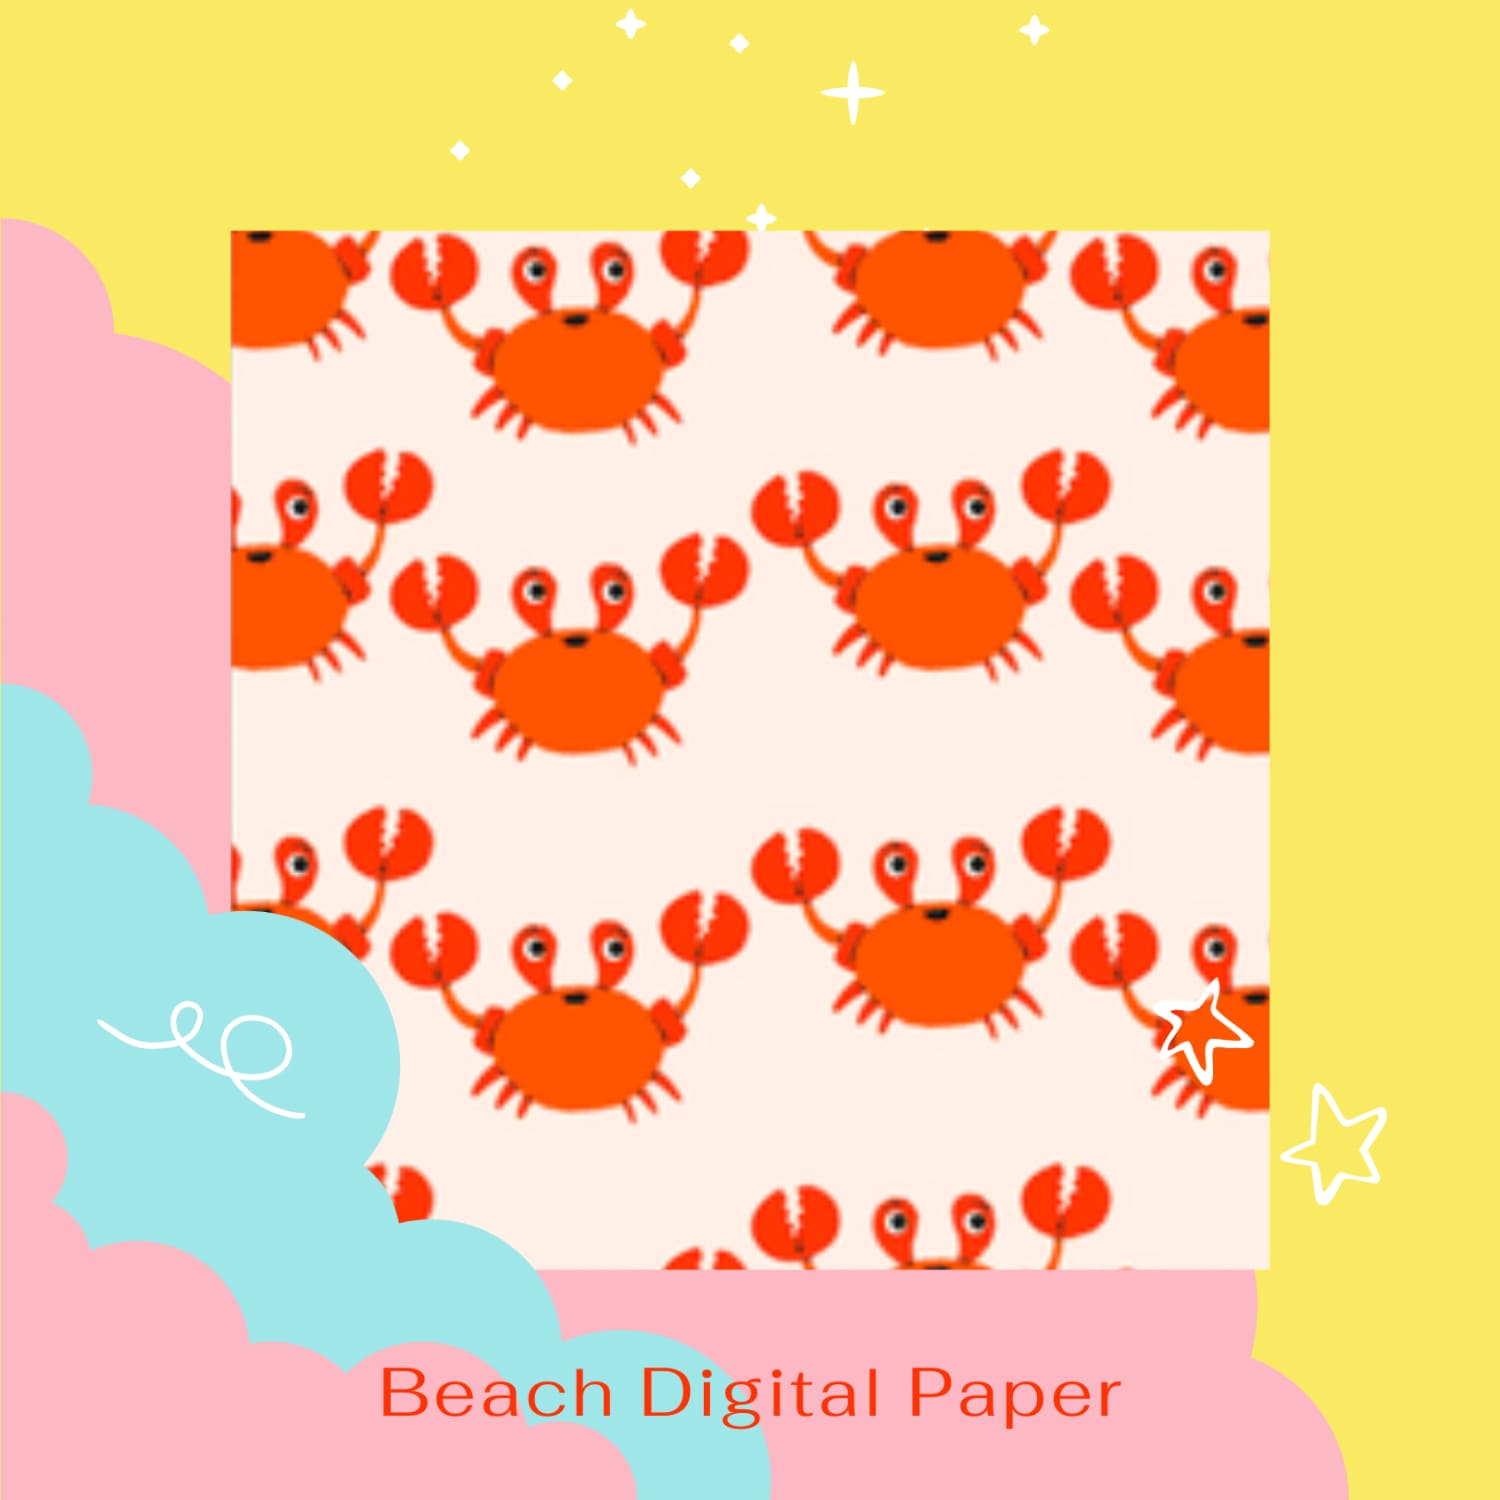 Beach digital paper - main image preview.